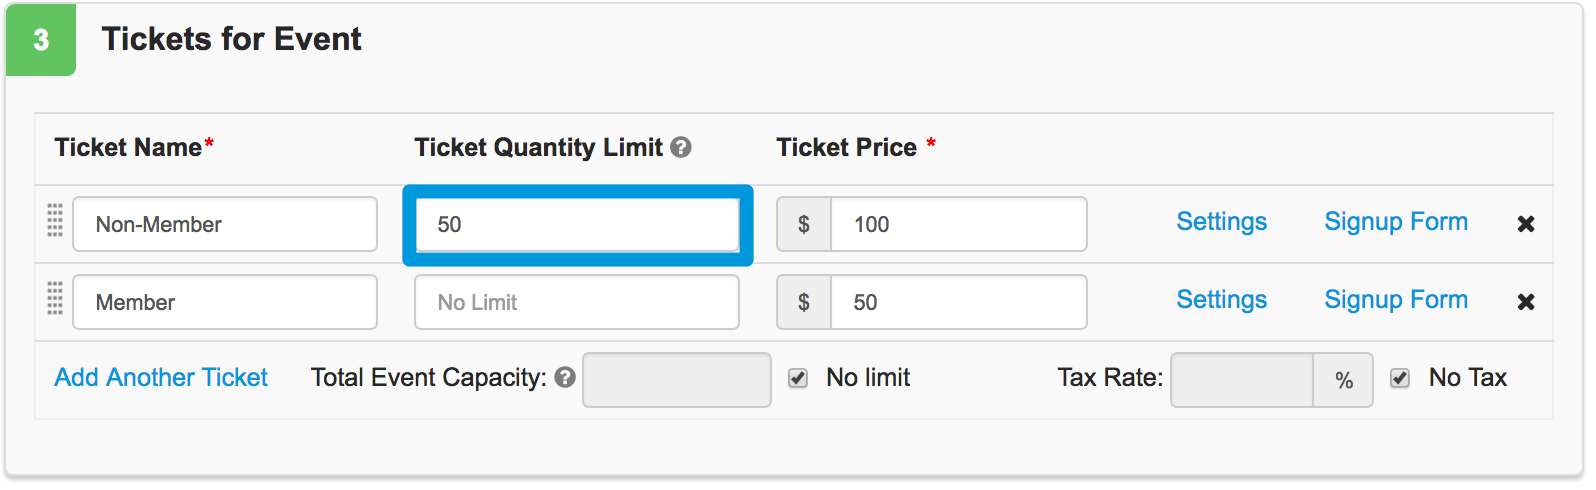 ticket_quantity_limit.png